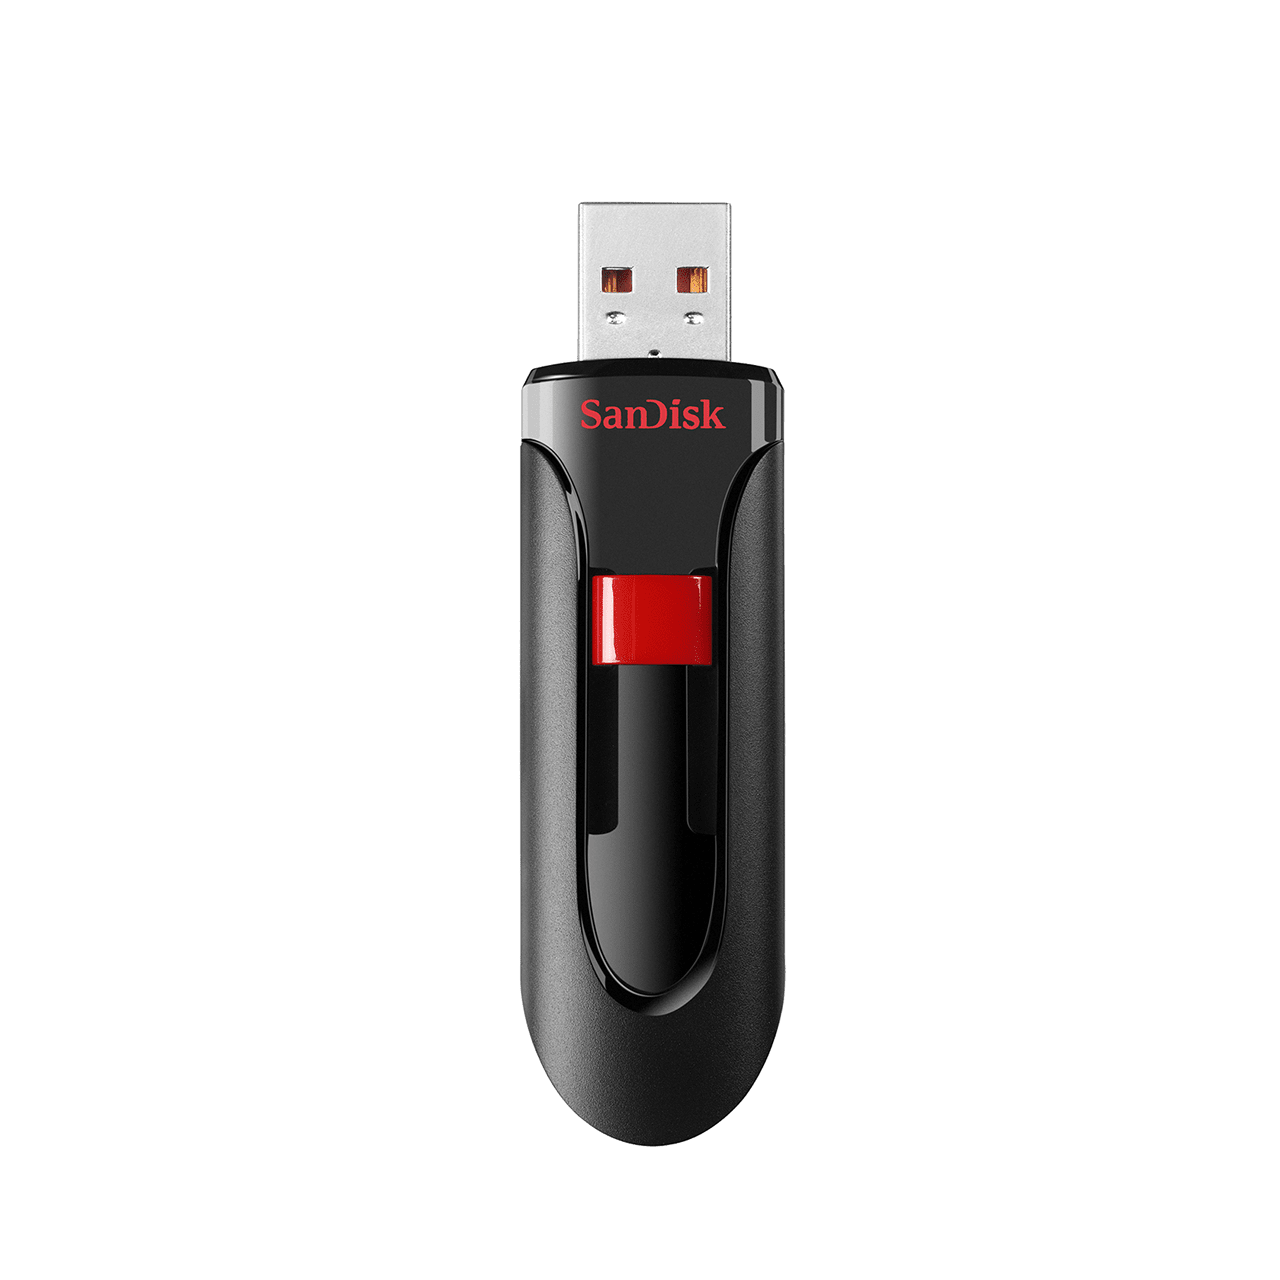 SDCZ60-256G-B35 # SanDisk 256 GB CRUZER GLIDE USB, USB2.0, BLACK, Mobile Disk Drive